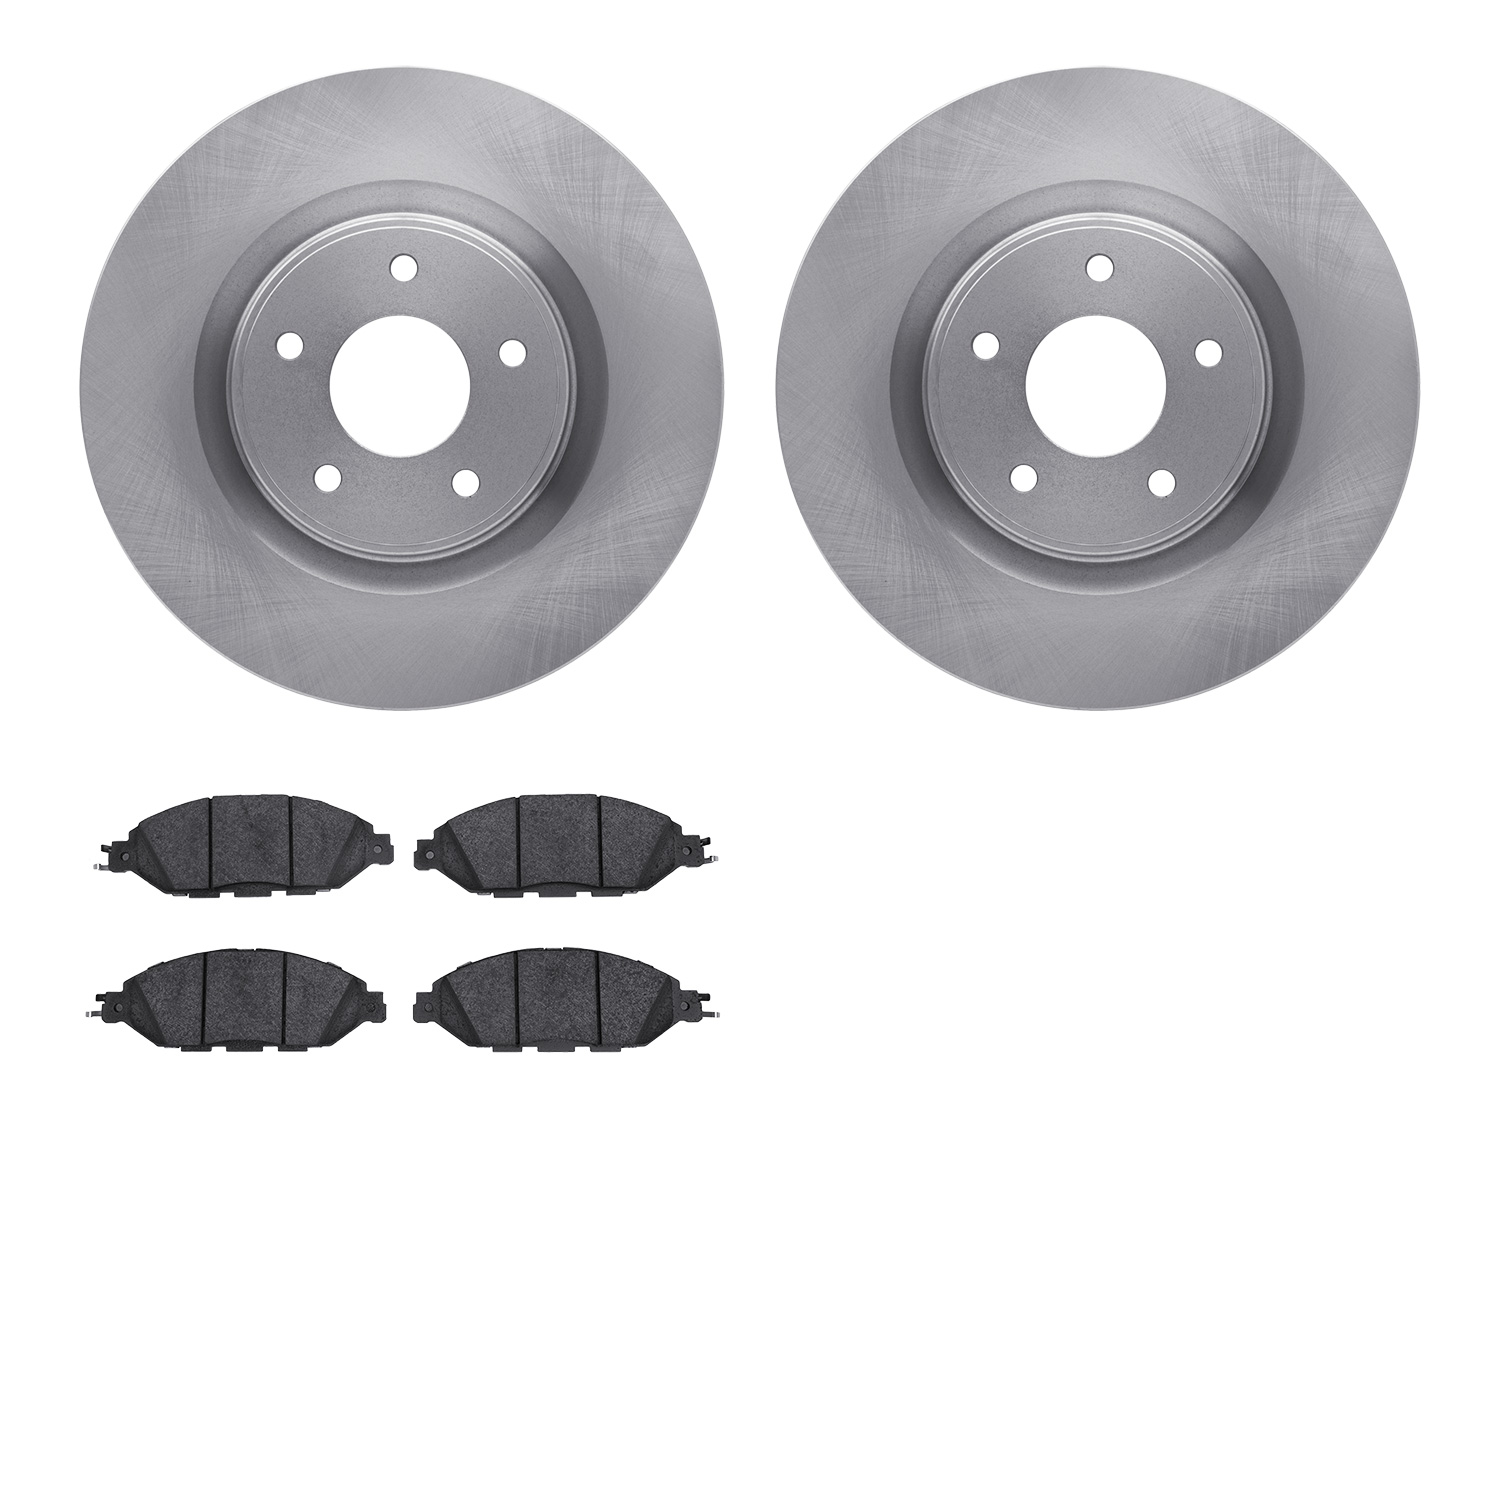 6302-67125 Brake Rotors with 3000-Series Ceramic Brake Pads Kit, Fits Select Infiniti/Nissan, Position: Front